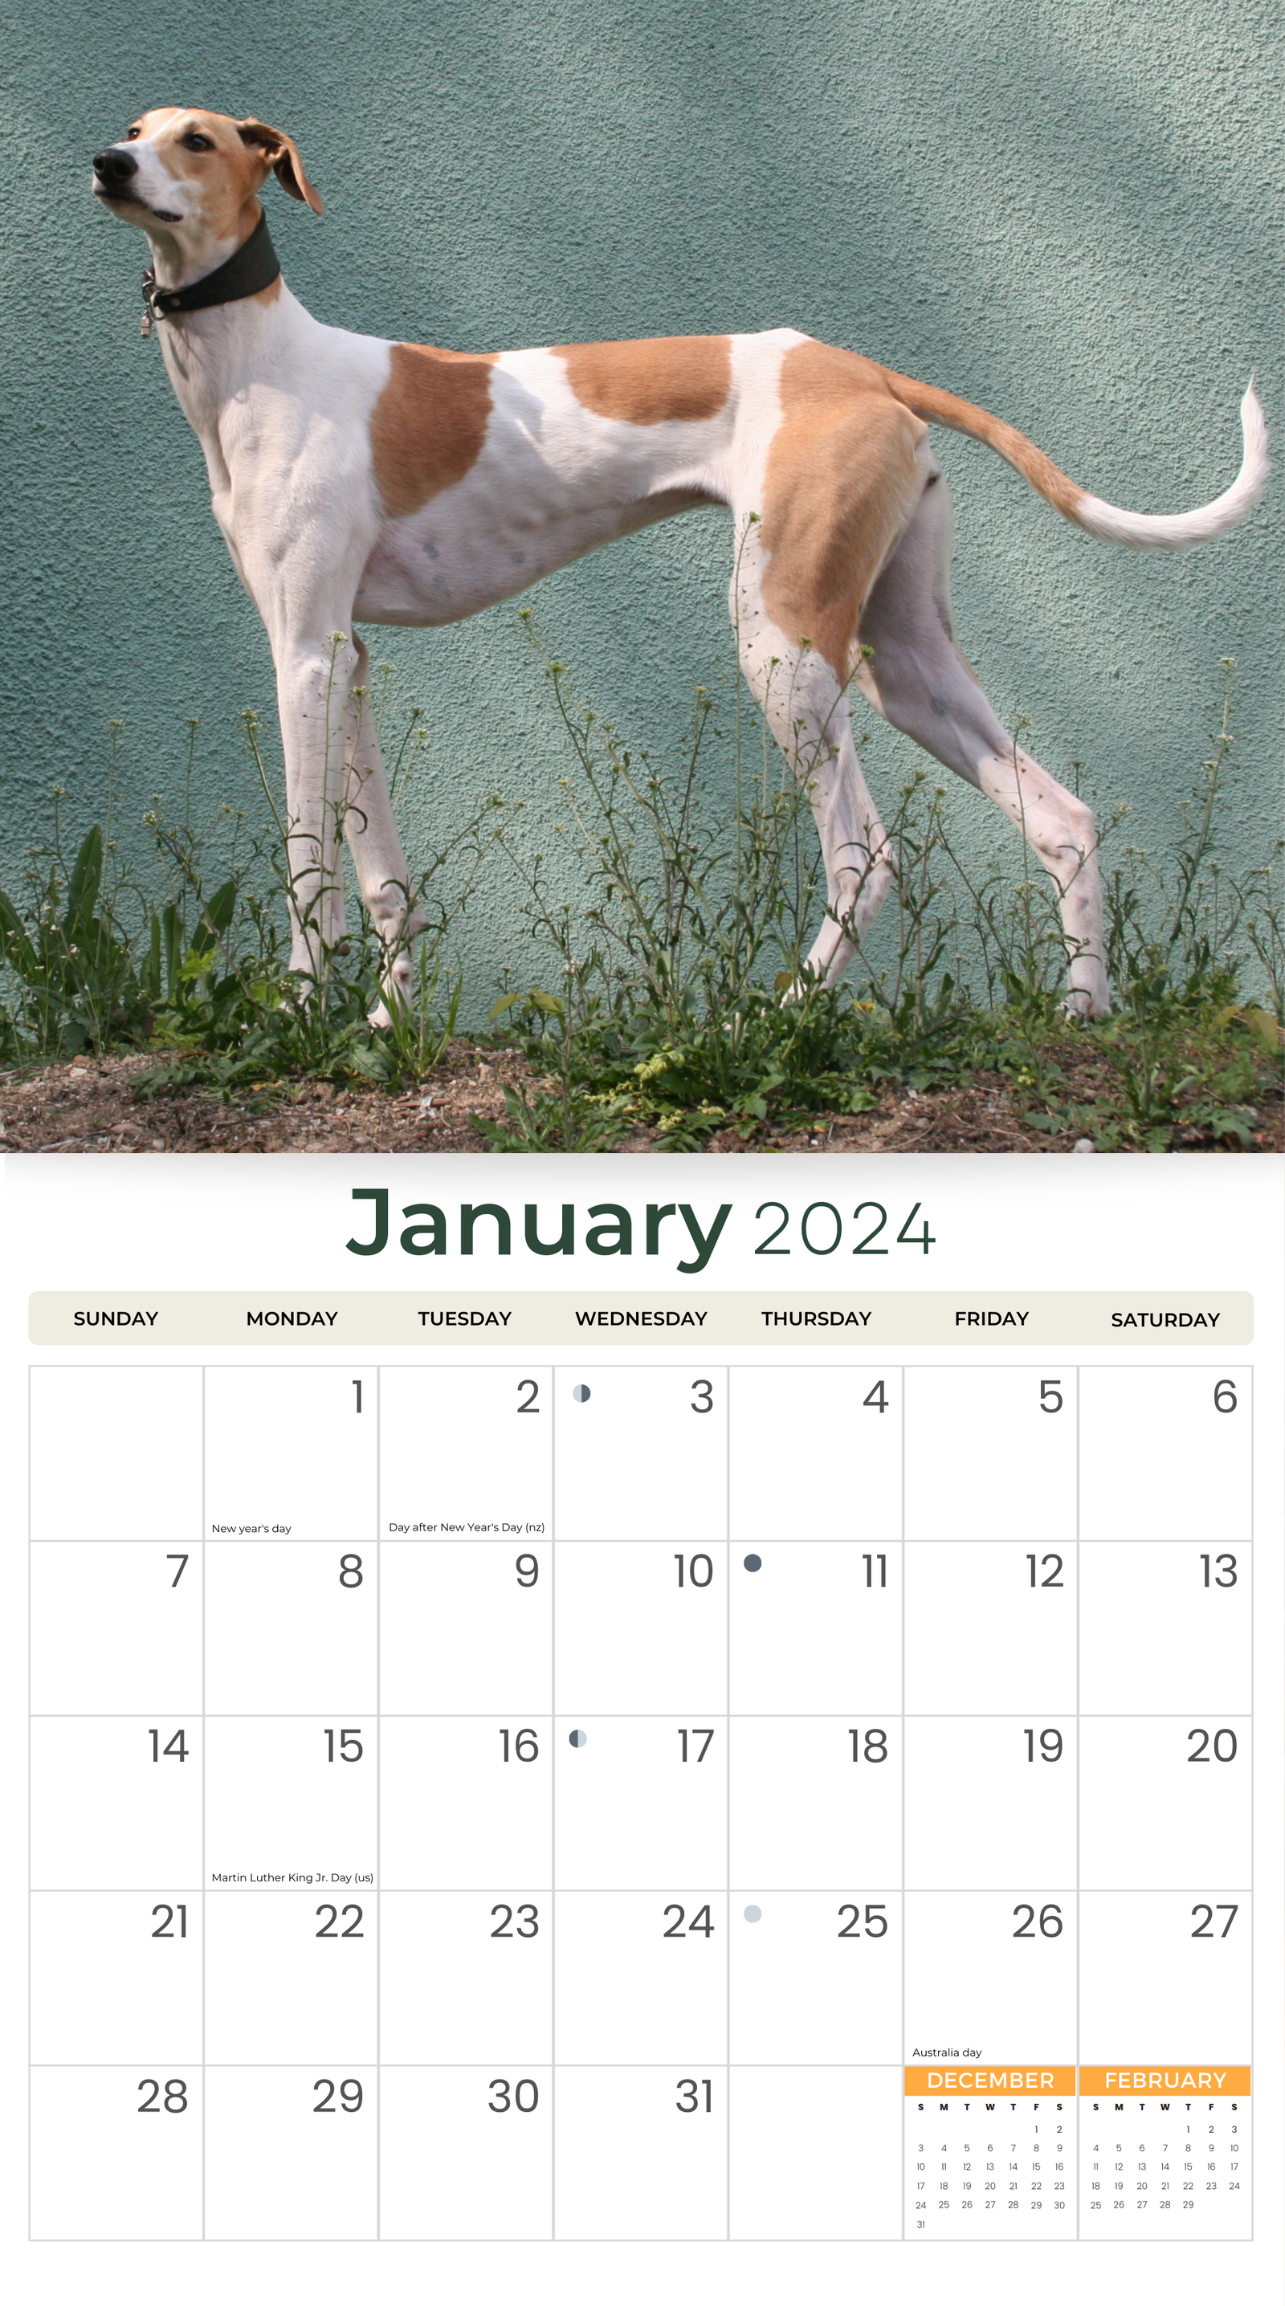 2024 Greyhounds - Deluxe Wall Calendar